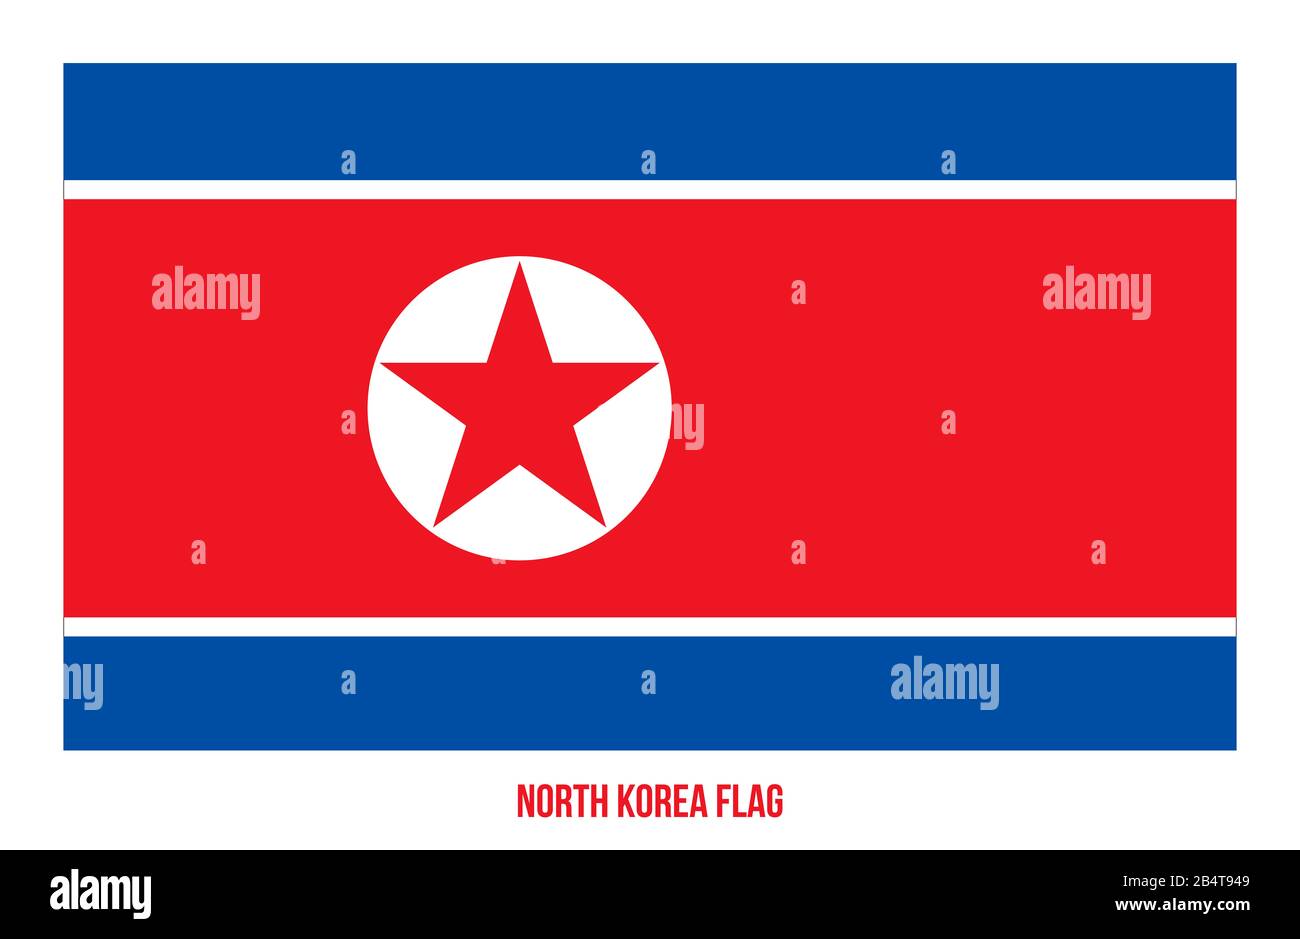 North Korea Flag Vector Illustration on White Background. North Korea National Flag. Stock Photo